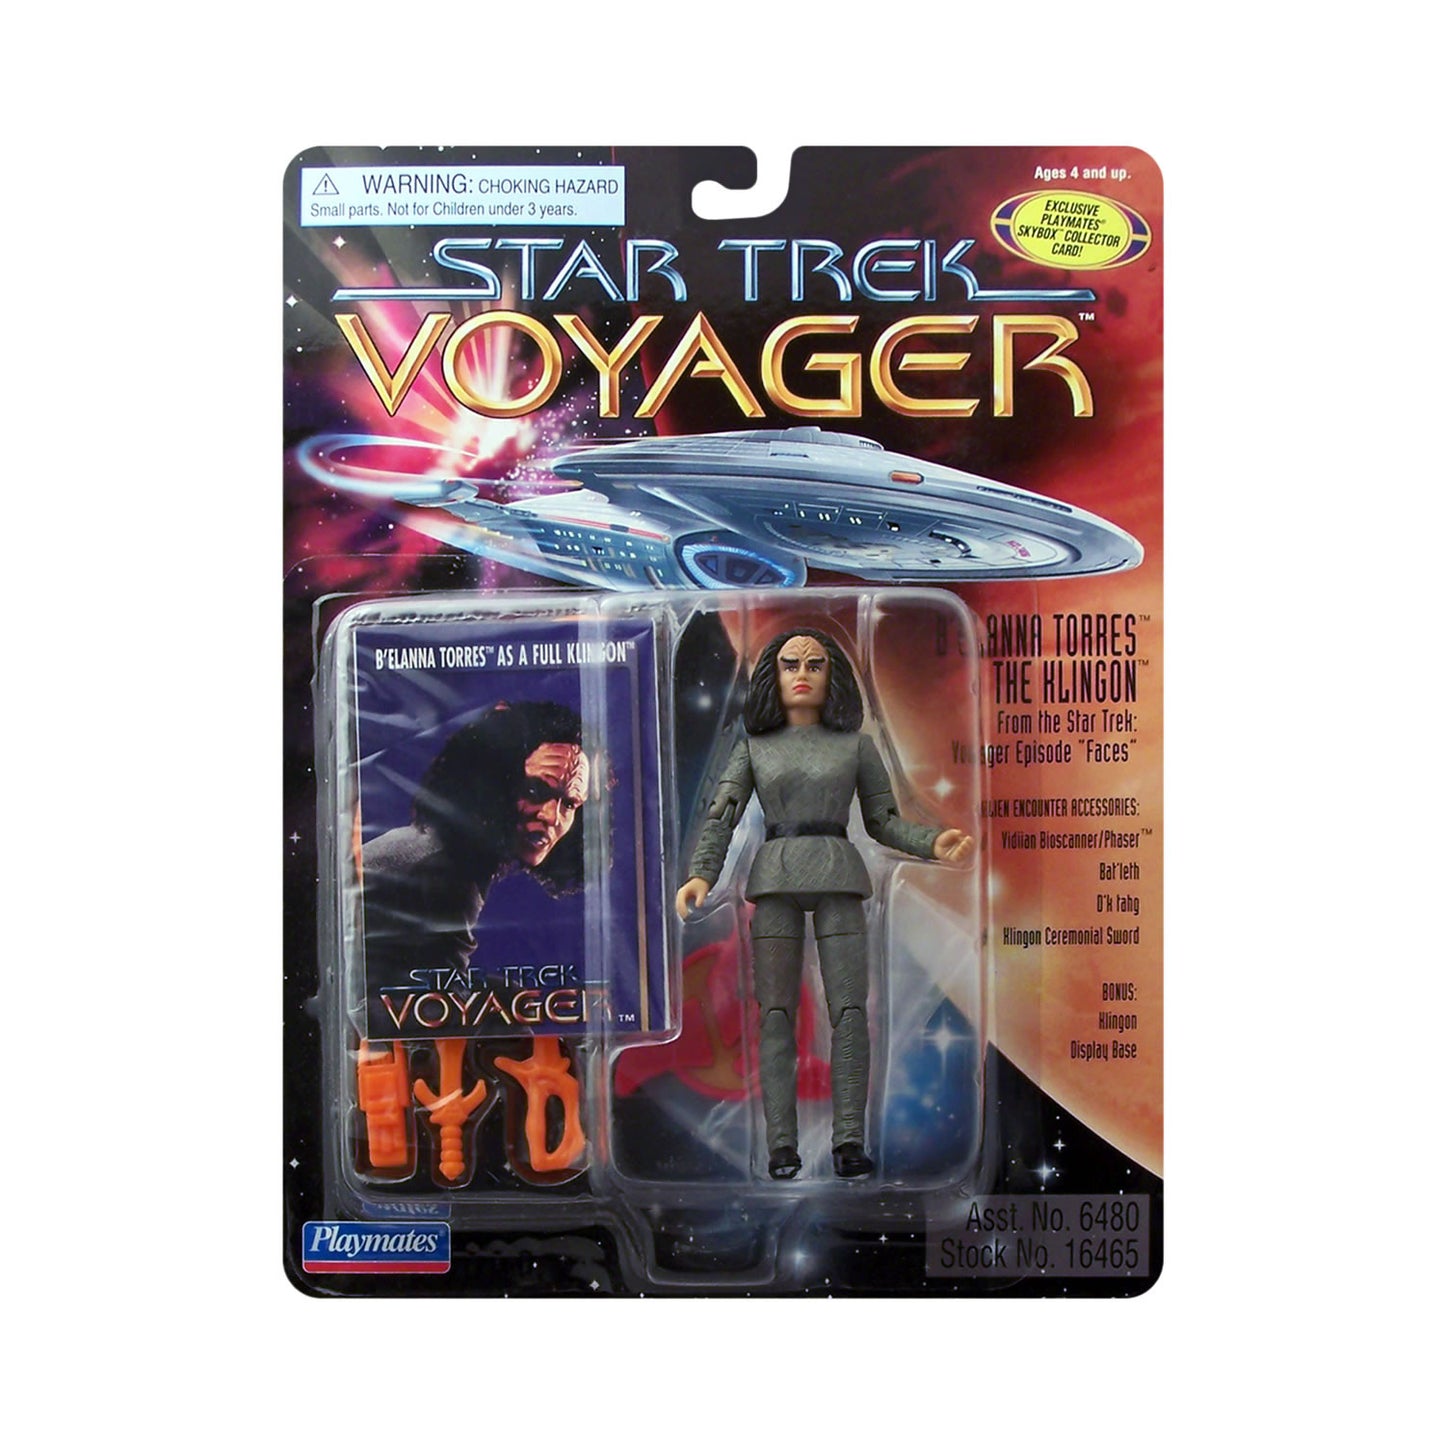 B'Elanna Torres the Klingon from the Star Trek: Voyager Episode "Faces"